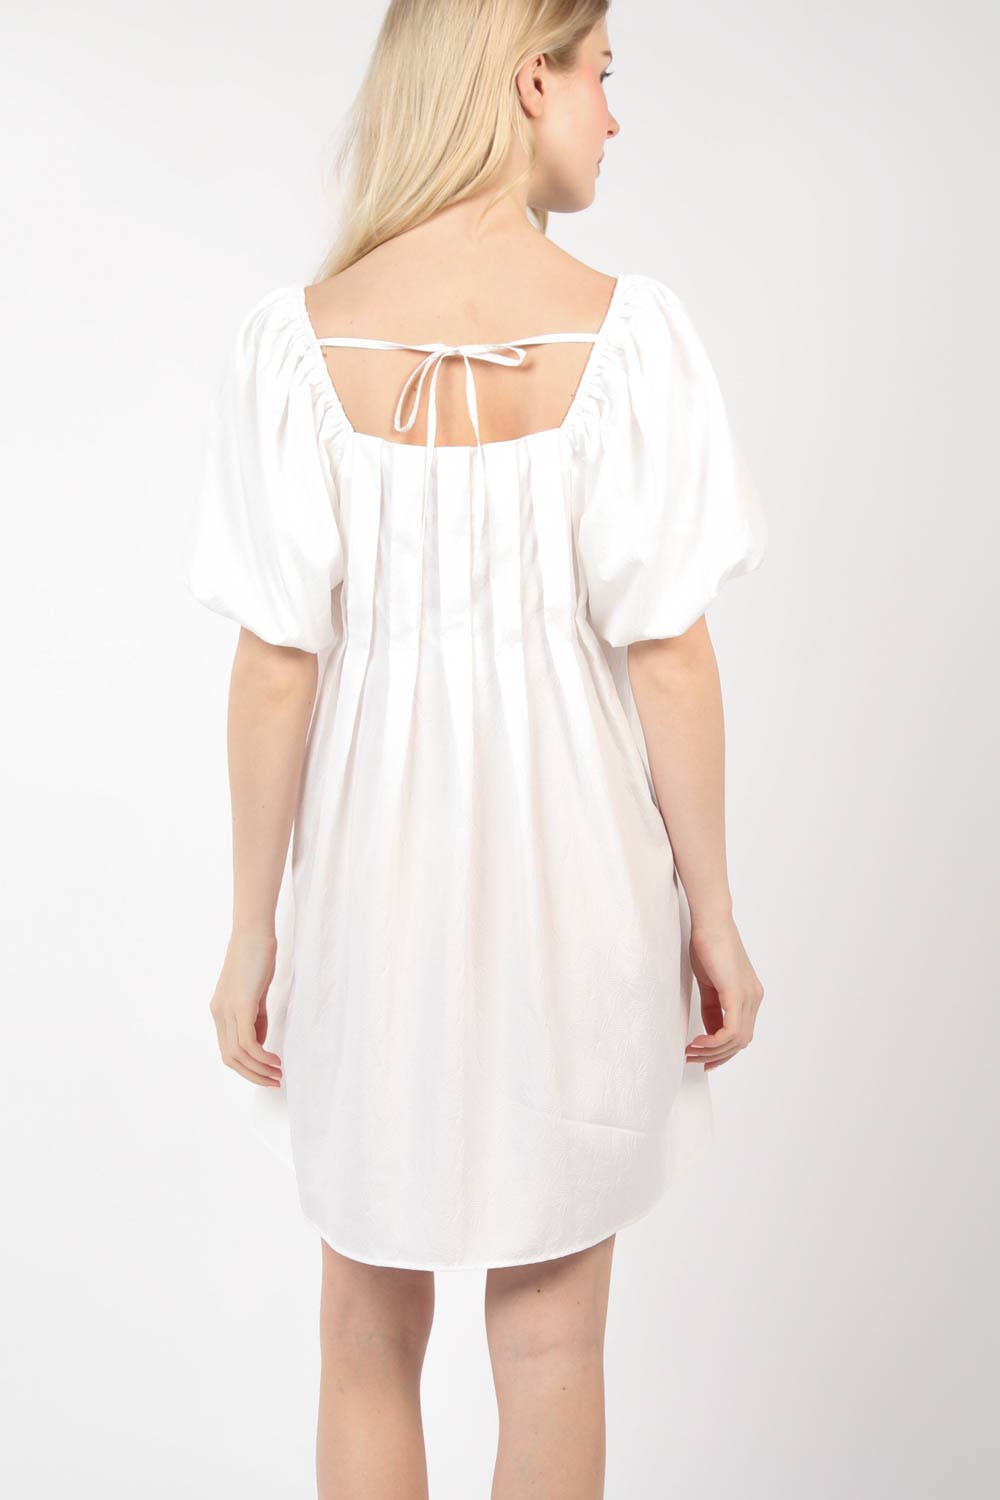 White Spring Mini Dress